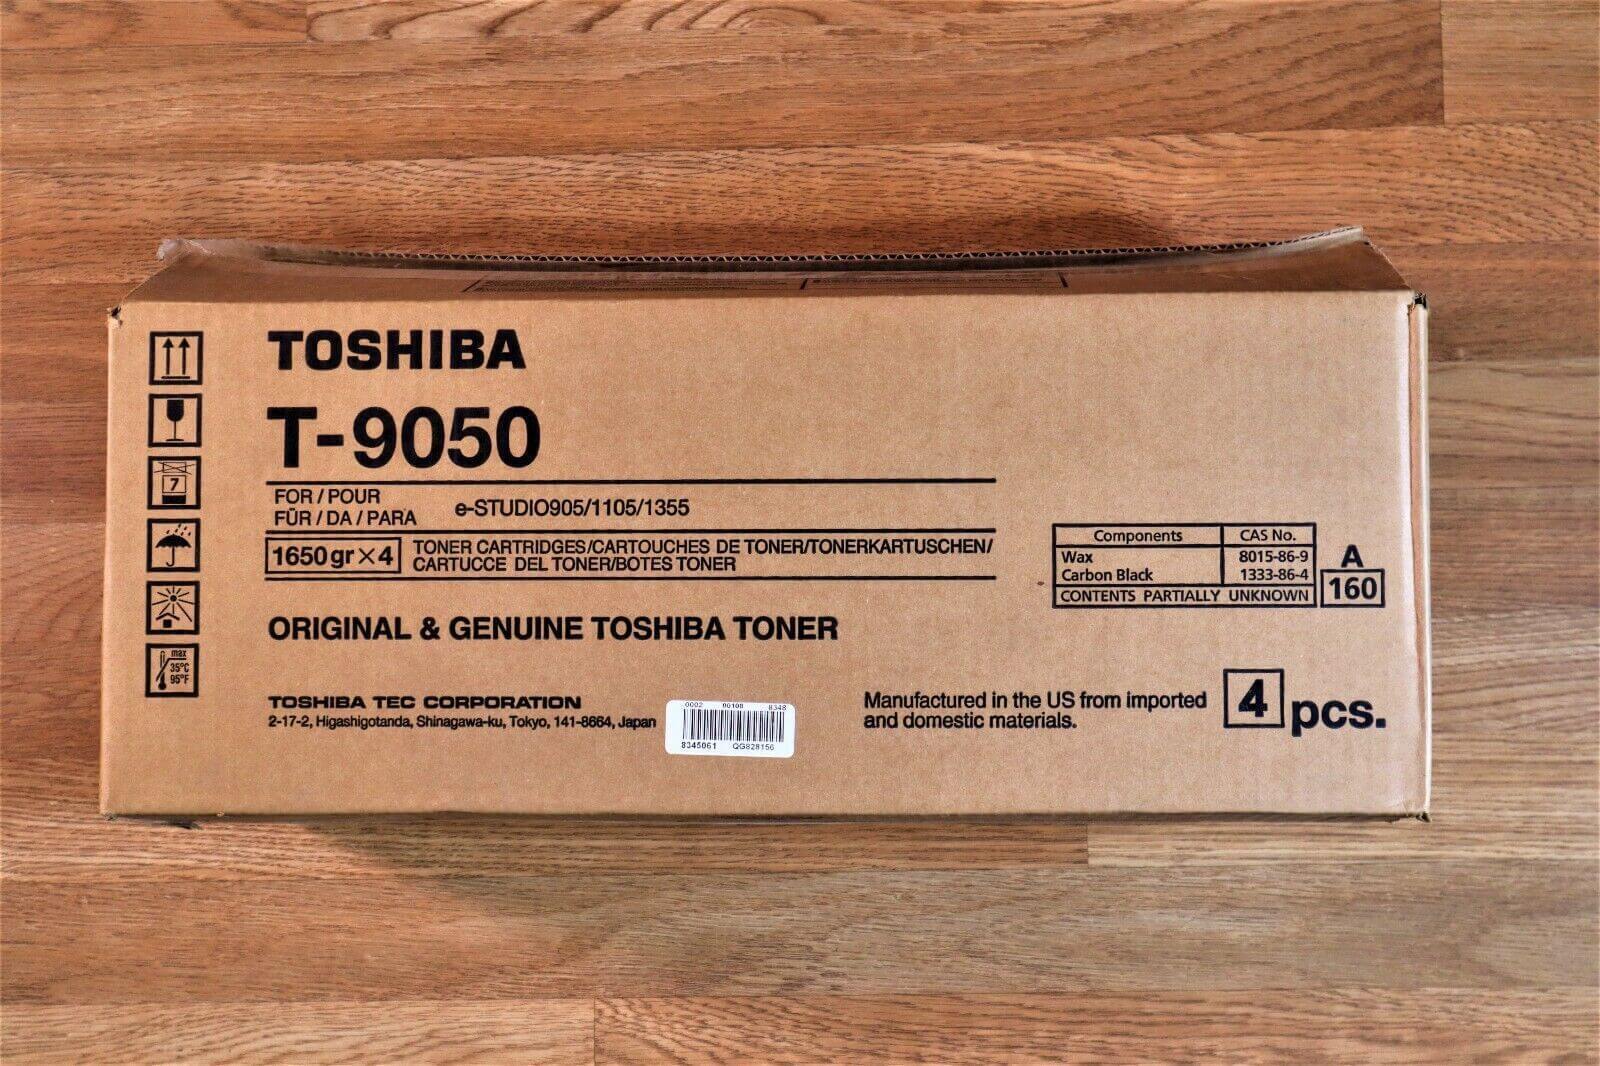 4Pack Toshiba T-9050 Toner Cartridges e-STUDIO905/1105/1355 -Same Day Shipping